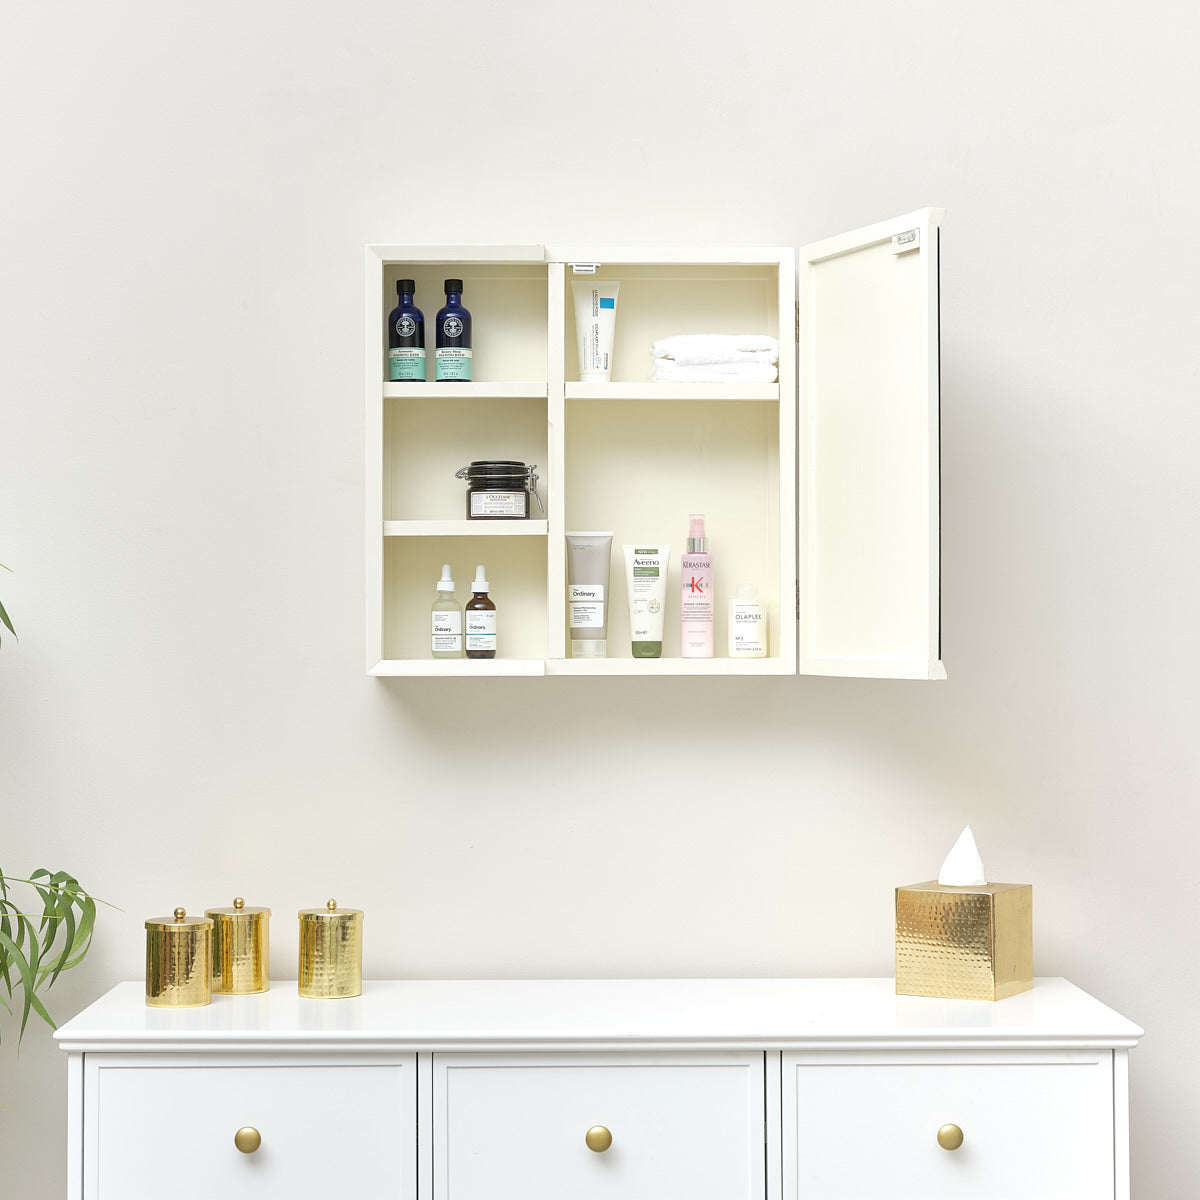 Cream Open Shelved Mirrored Wall Cabinet 53cm x 53cm